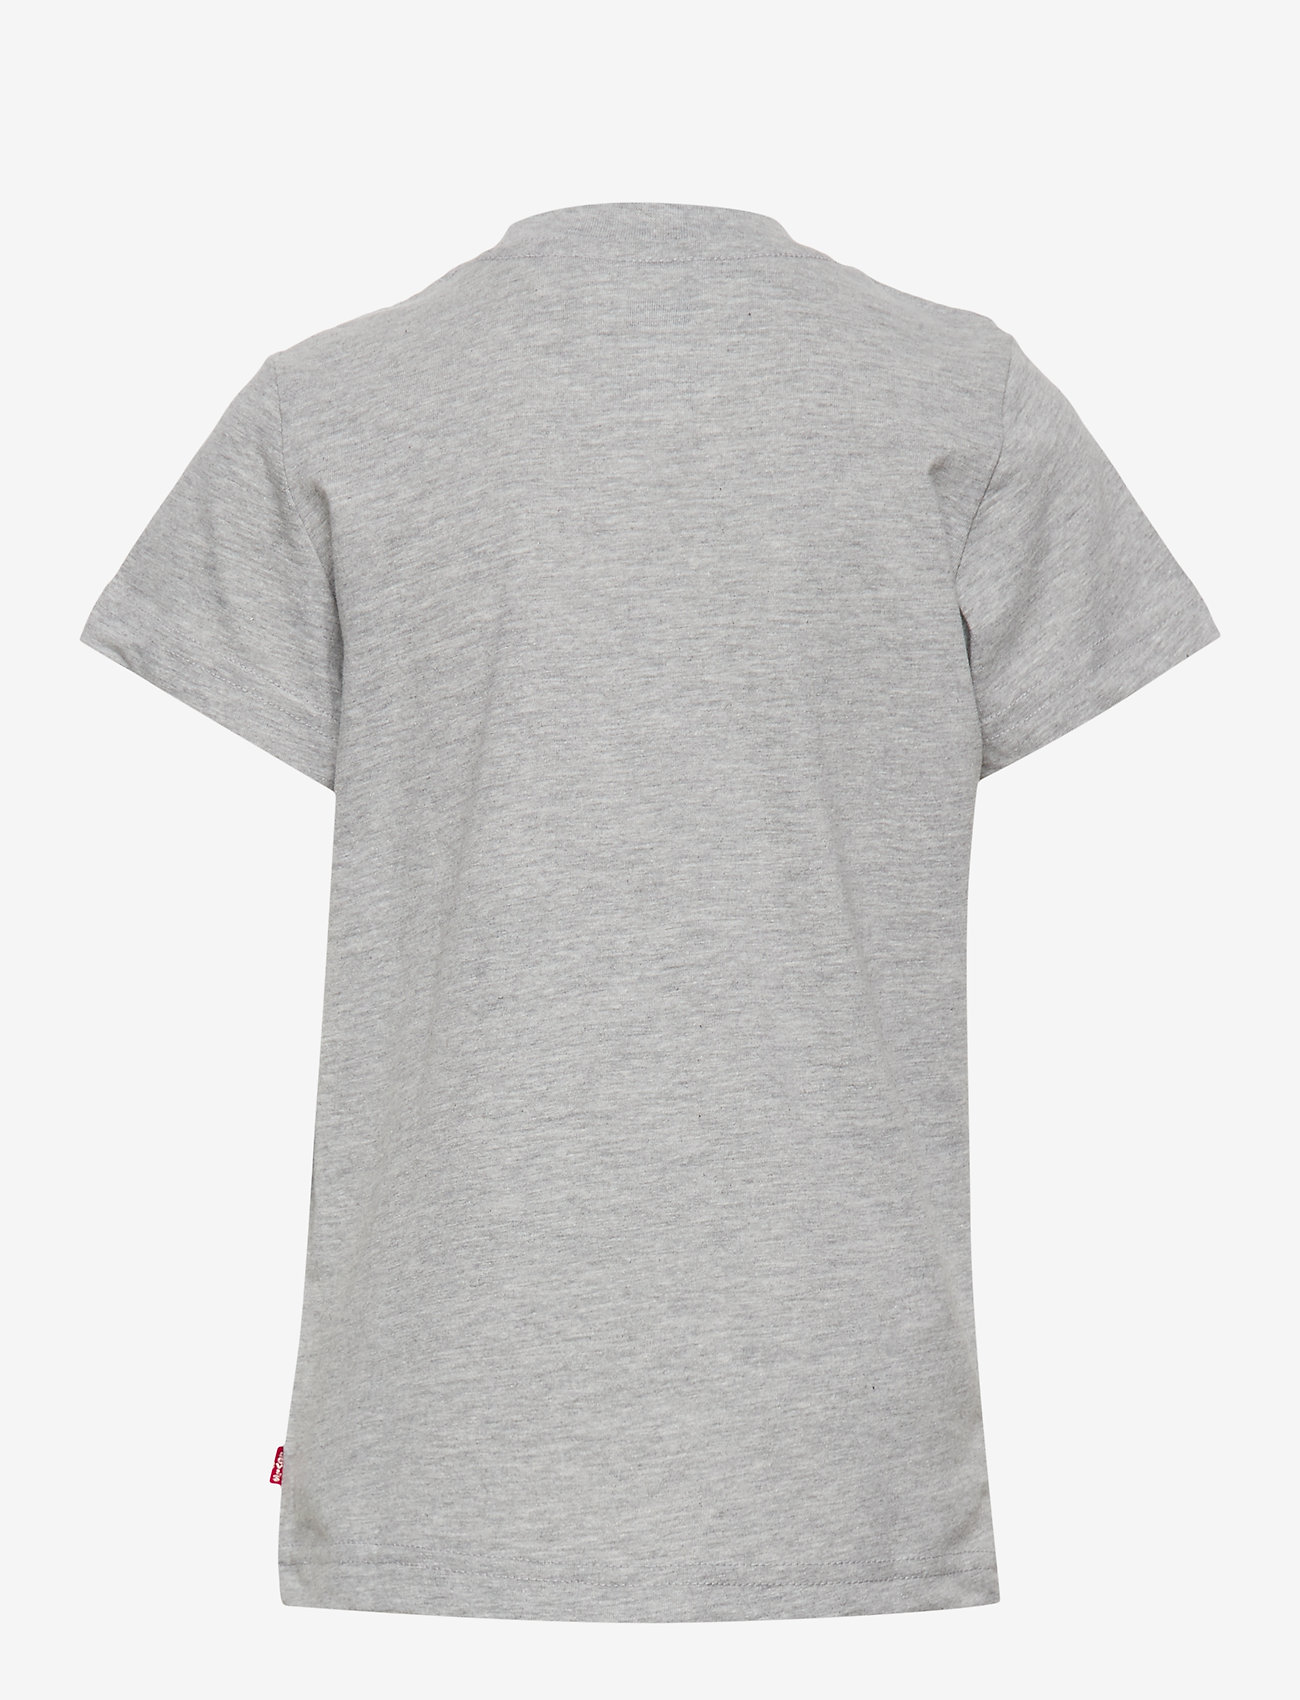 Levi's - Levi's® Long Sleeve Graphic Tee Shirt - short-sleeved t-shirts - peche - 1